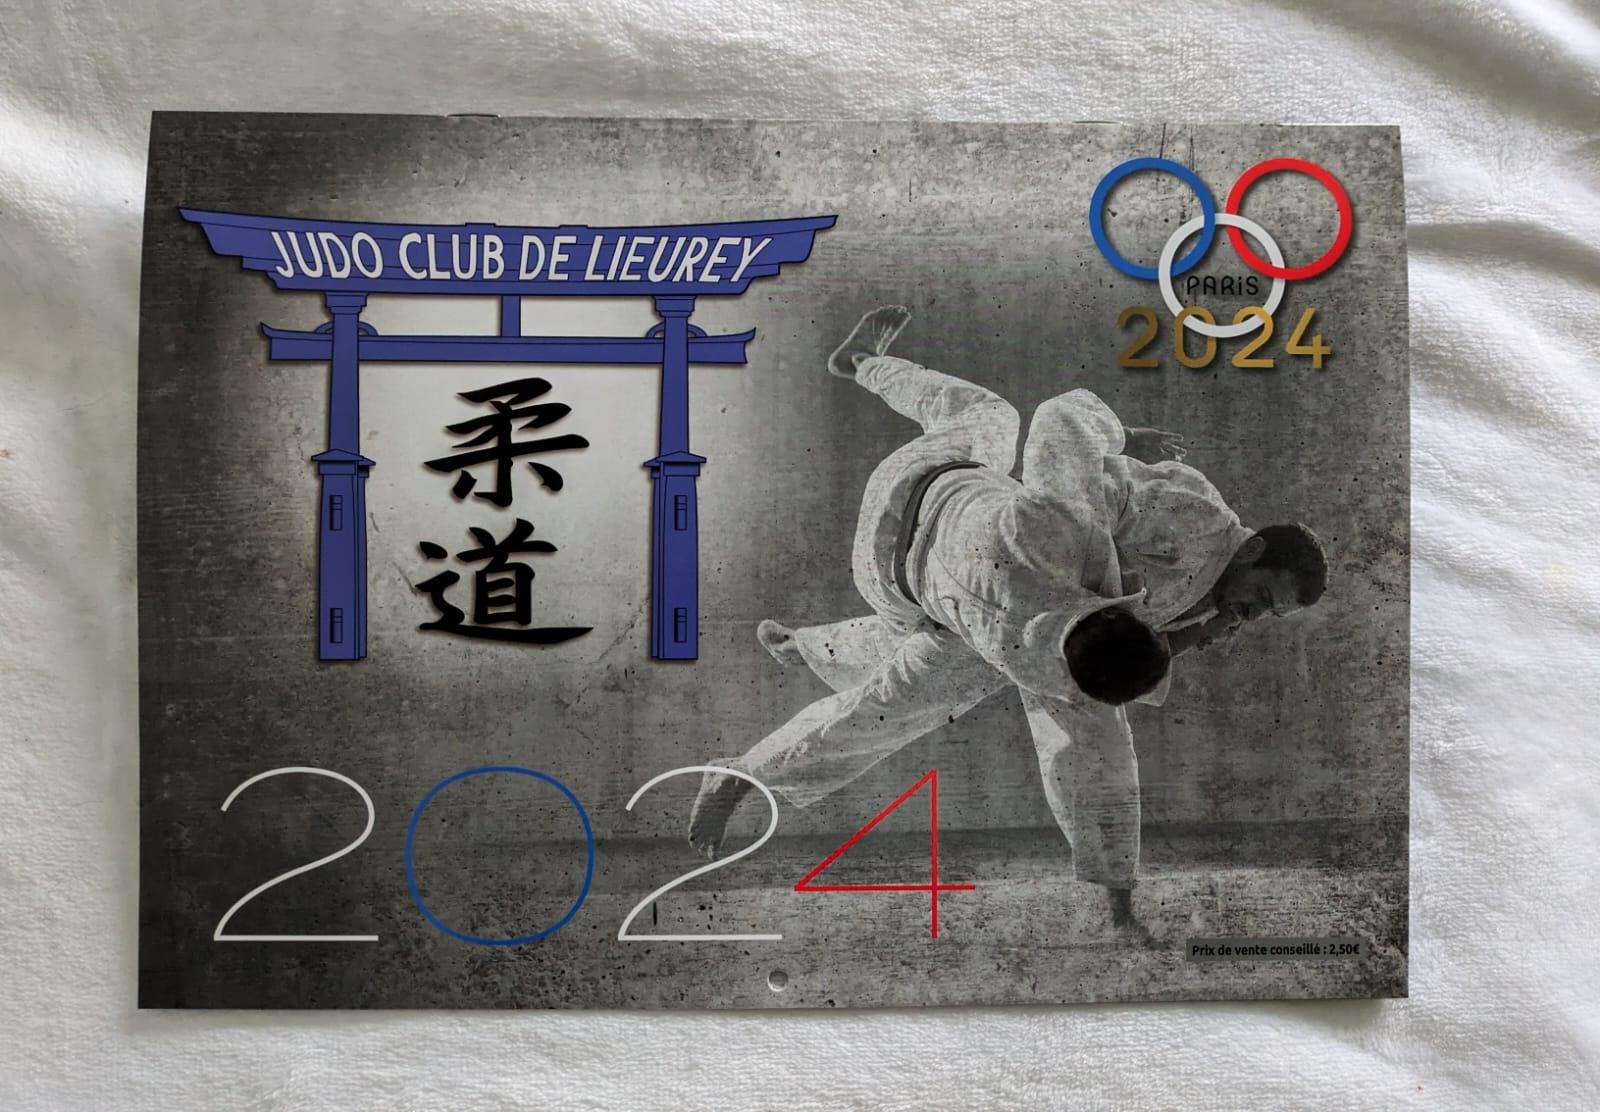 Judo Club de Lieurey